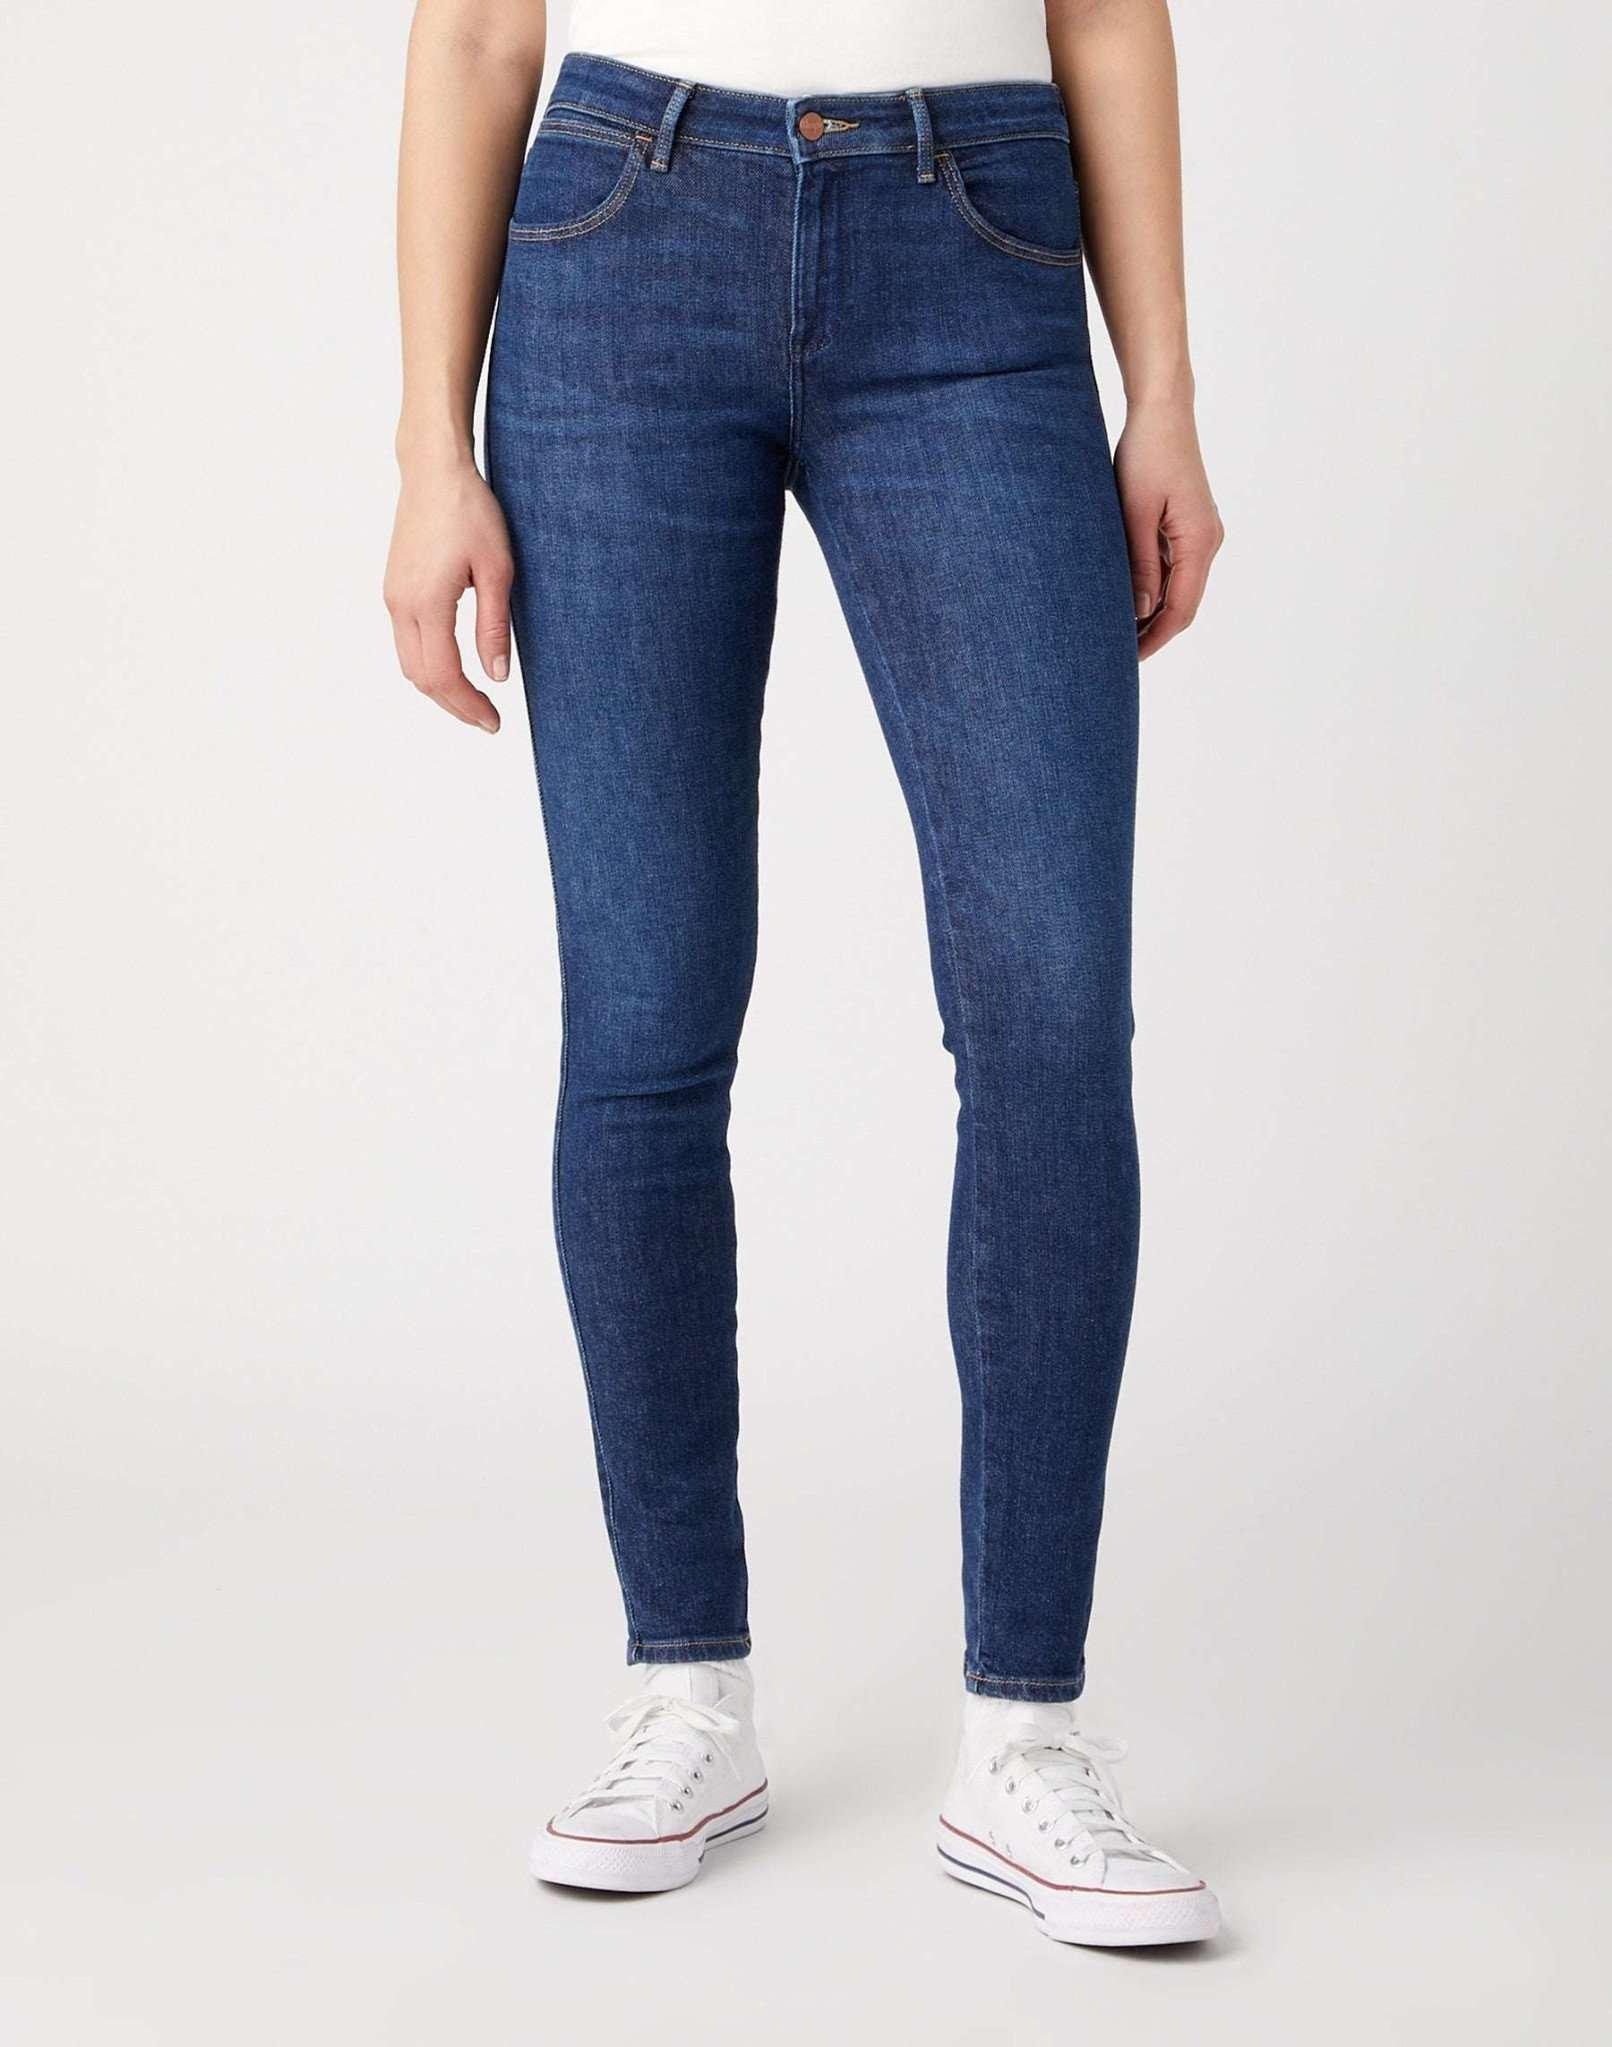 Jeans Skinny Fit Skinny Damen Blau L32/W32 von Wrangler